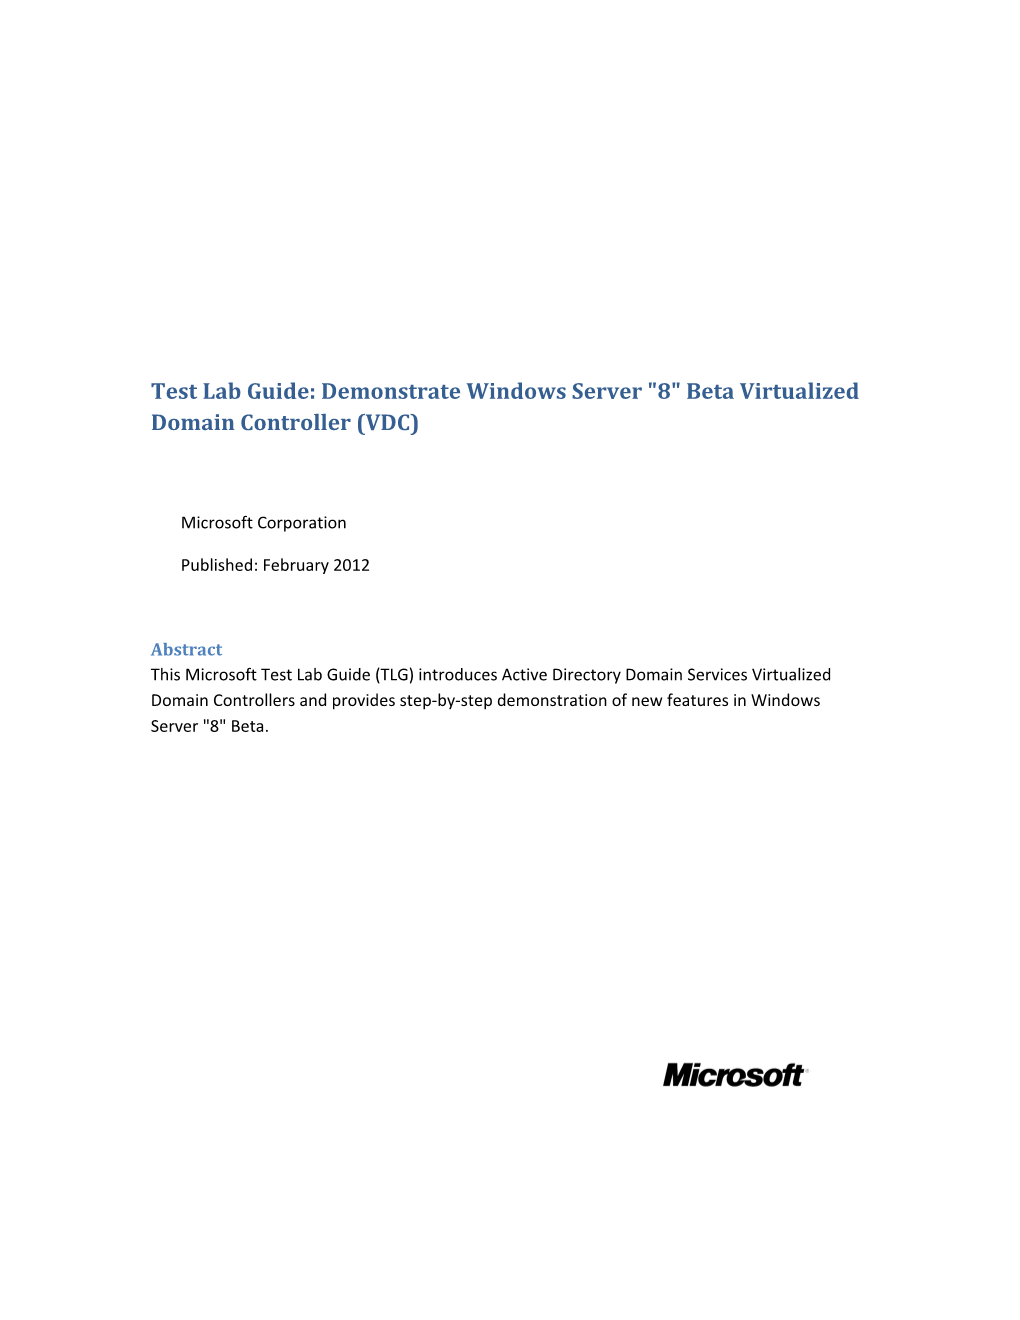 Test Lab Guide: Demonstrate Windows Server 8 Beta Virtualized Domain Controller (VDC)